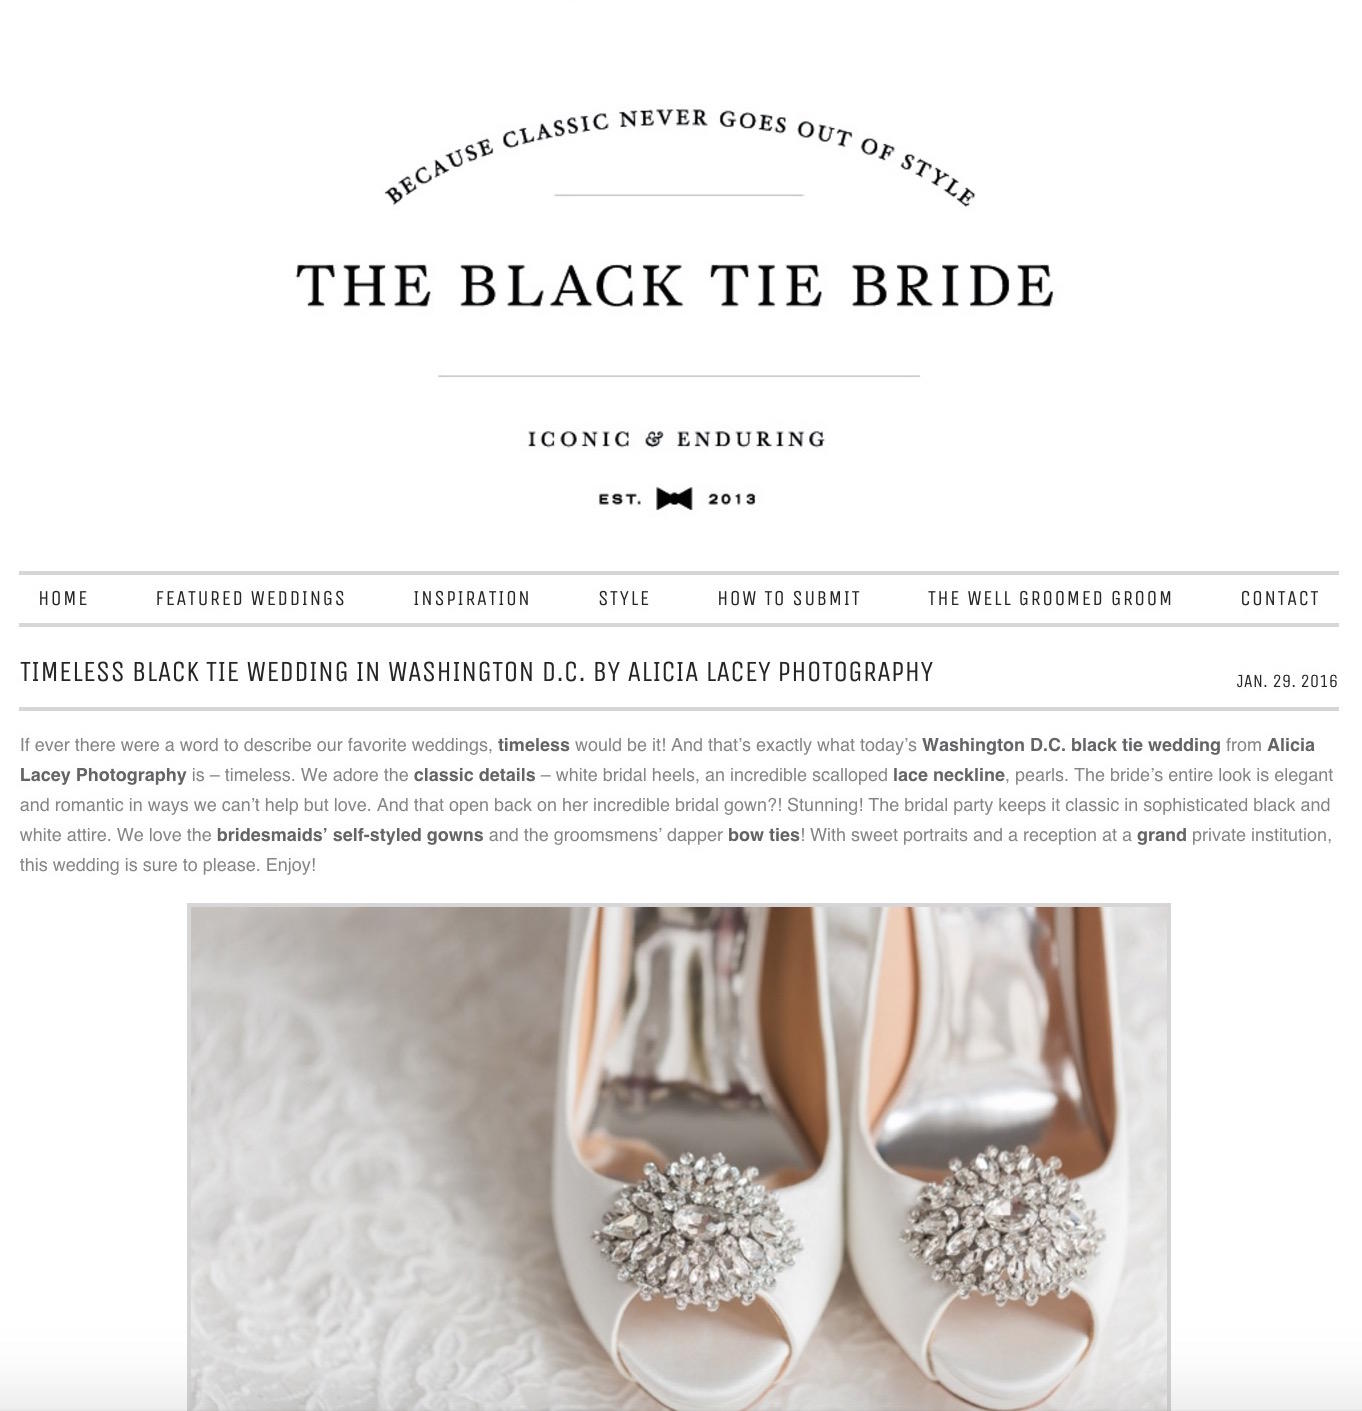 A gorgeous black tie wedding at The Metropolitan Club in Washington, DC is featured on the prestigious blog, The Black Tie Bride.